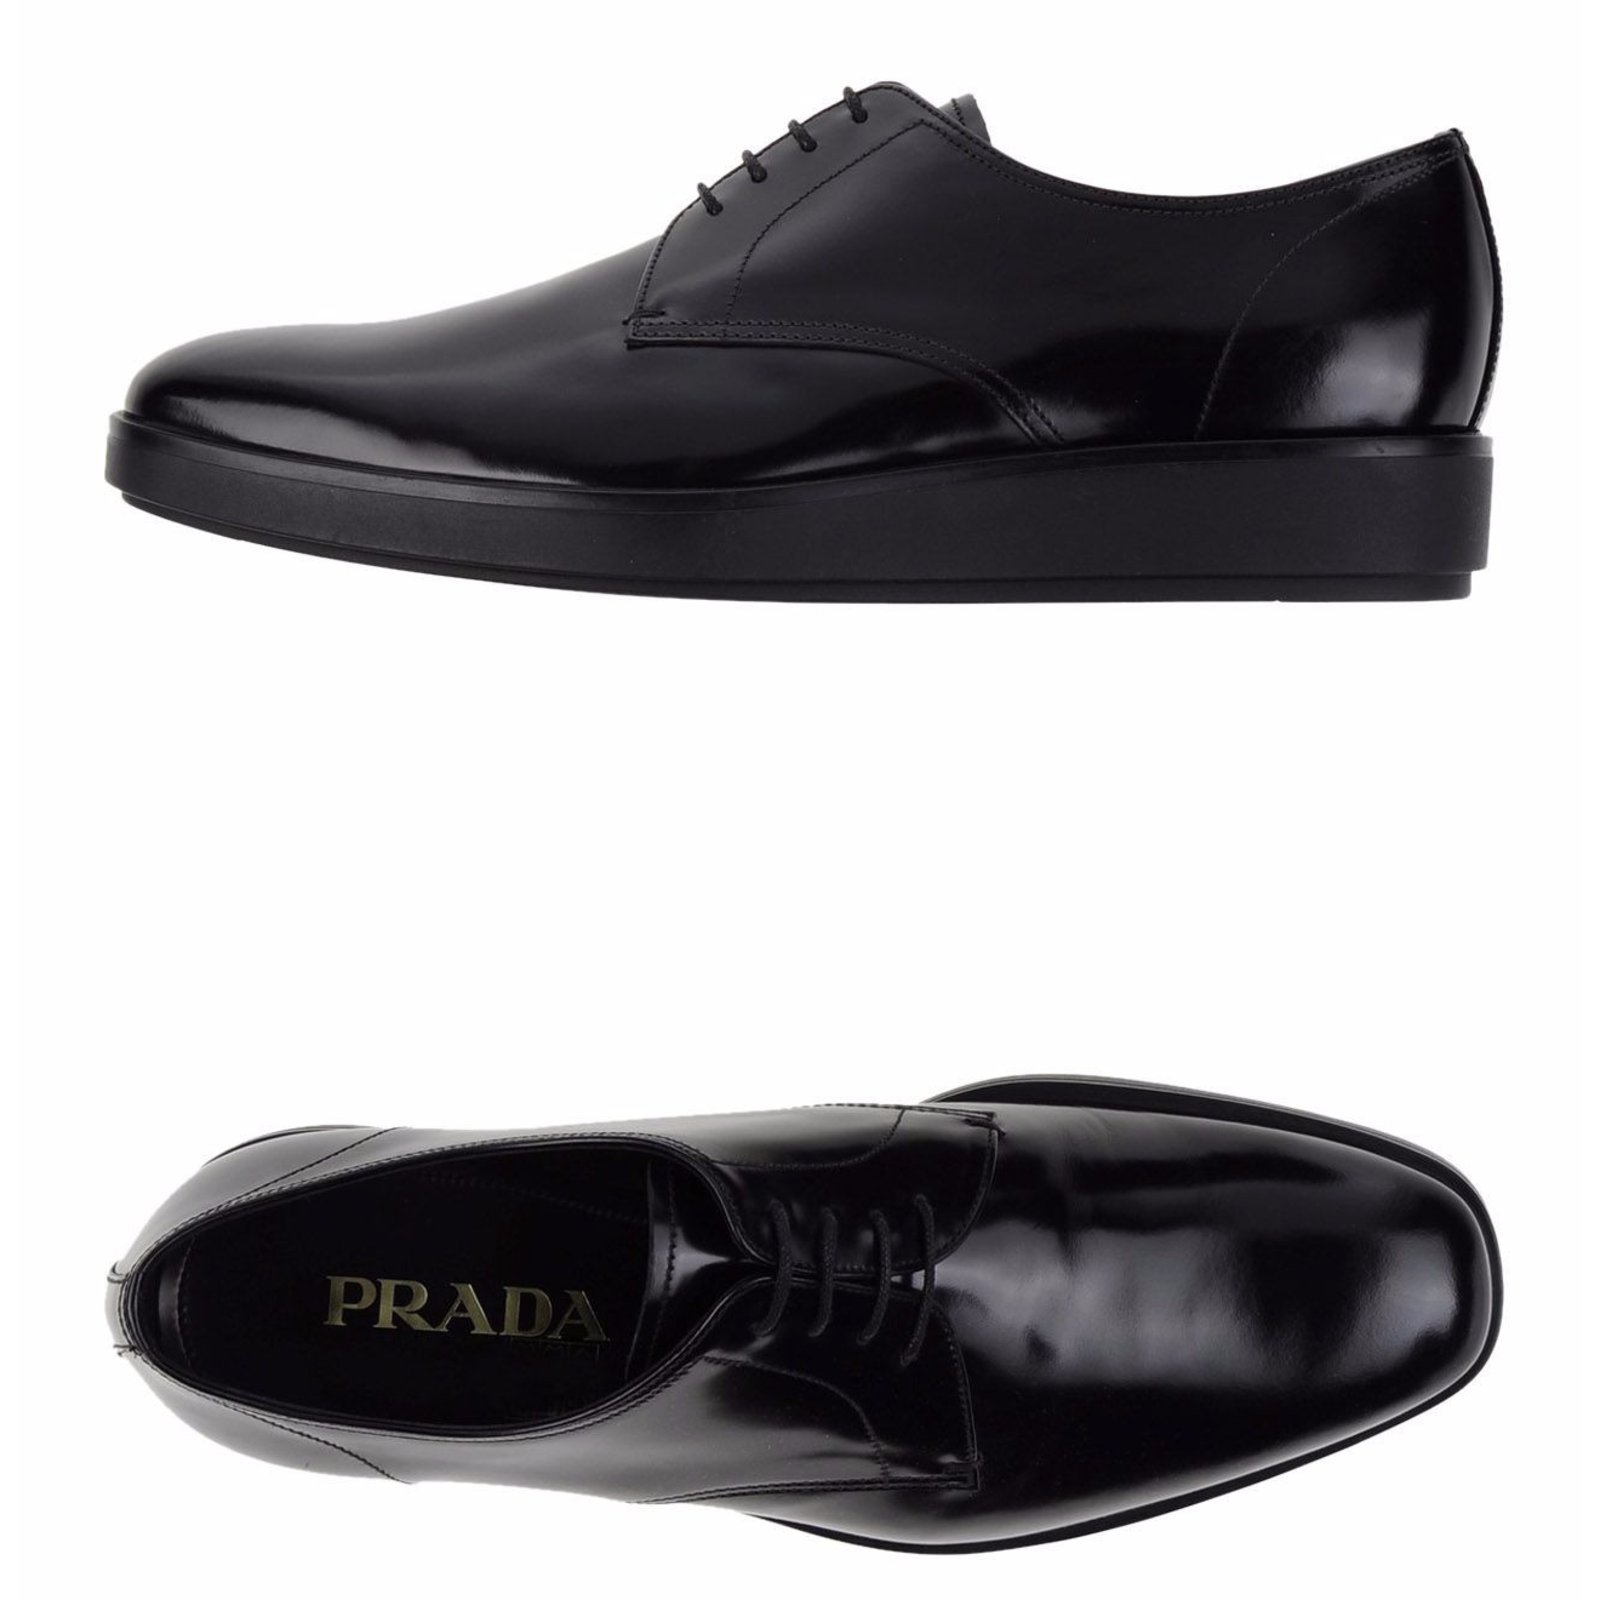 prada mens leather shoes